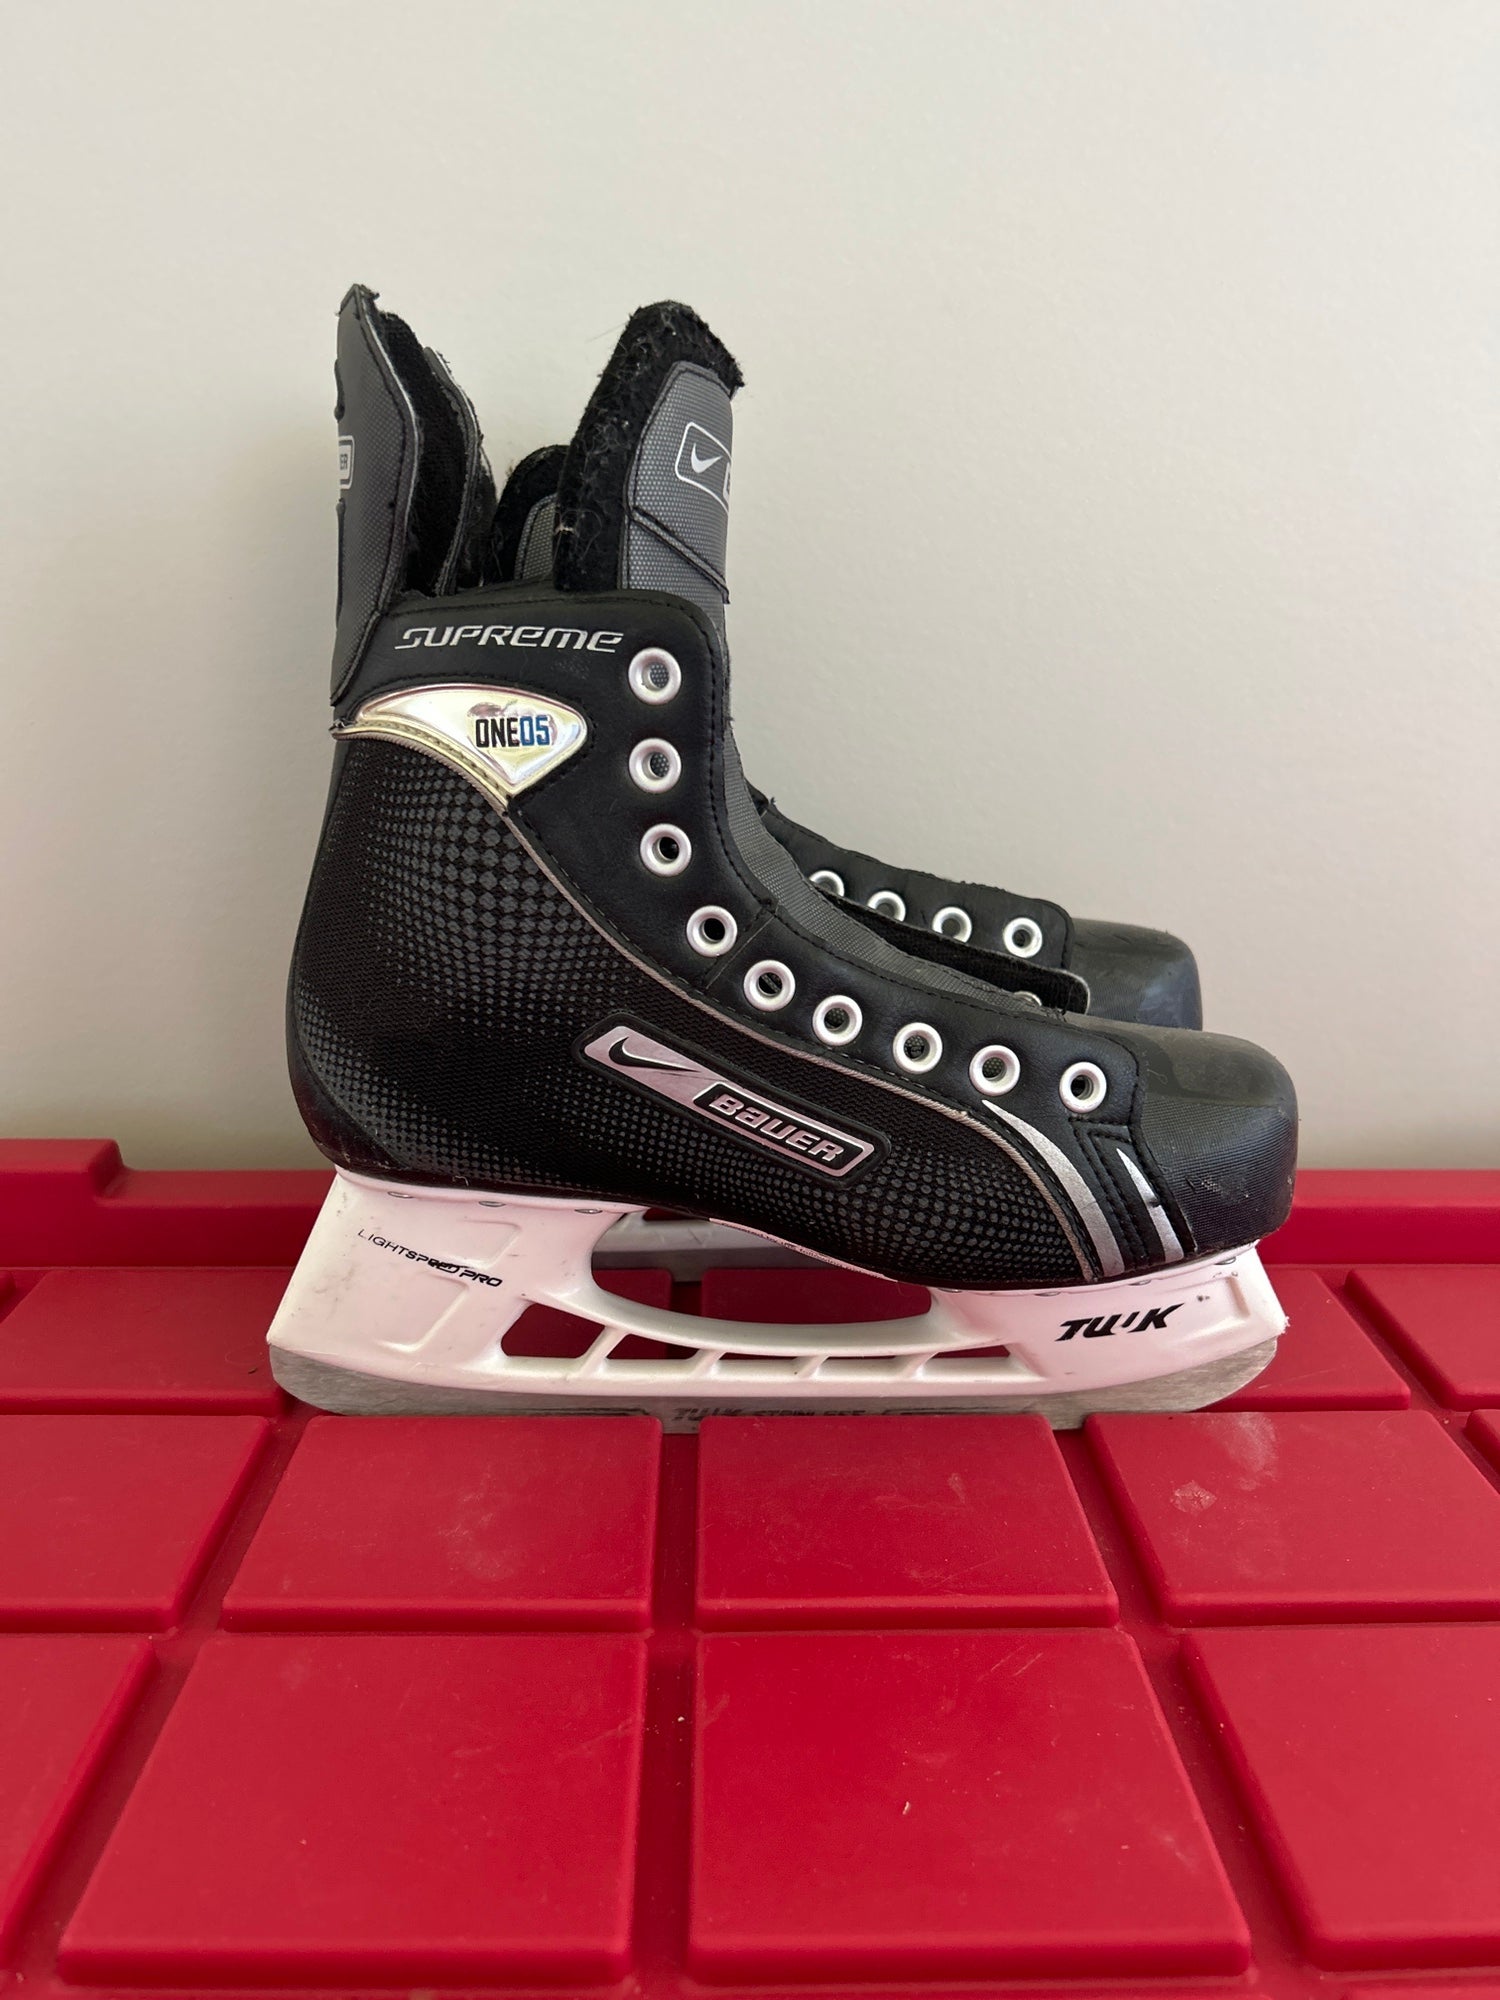 Intermediate Bauer Width Size 6 Supreme One05 Hockey Skates |